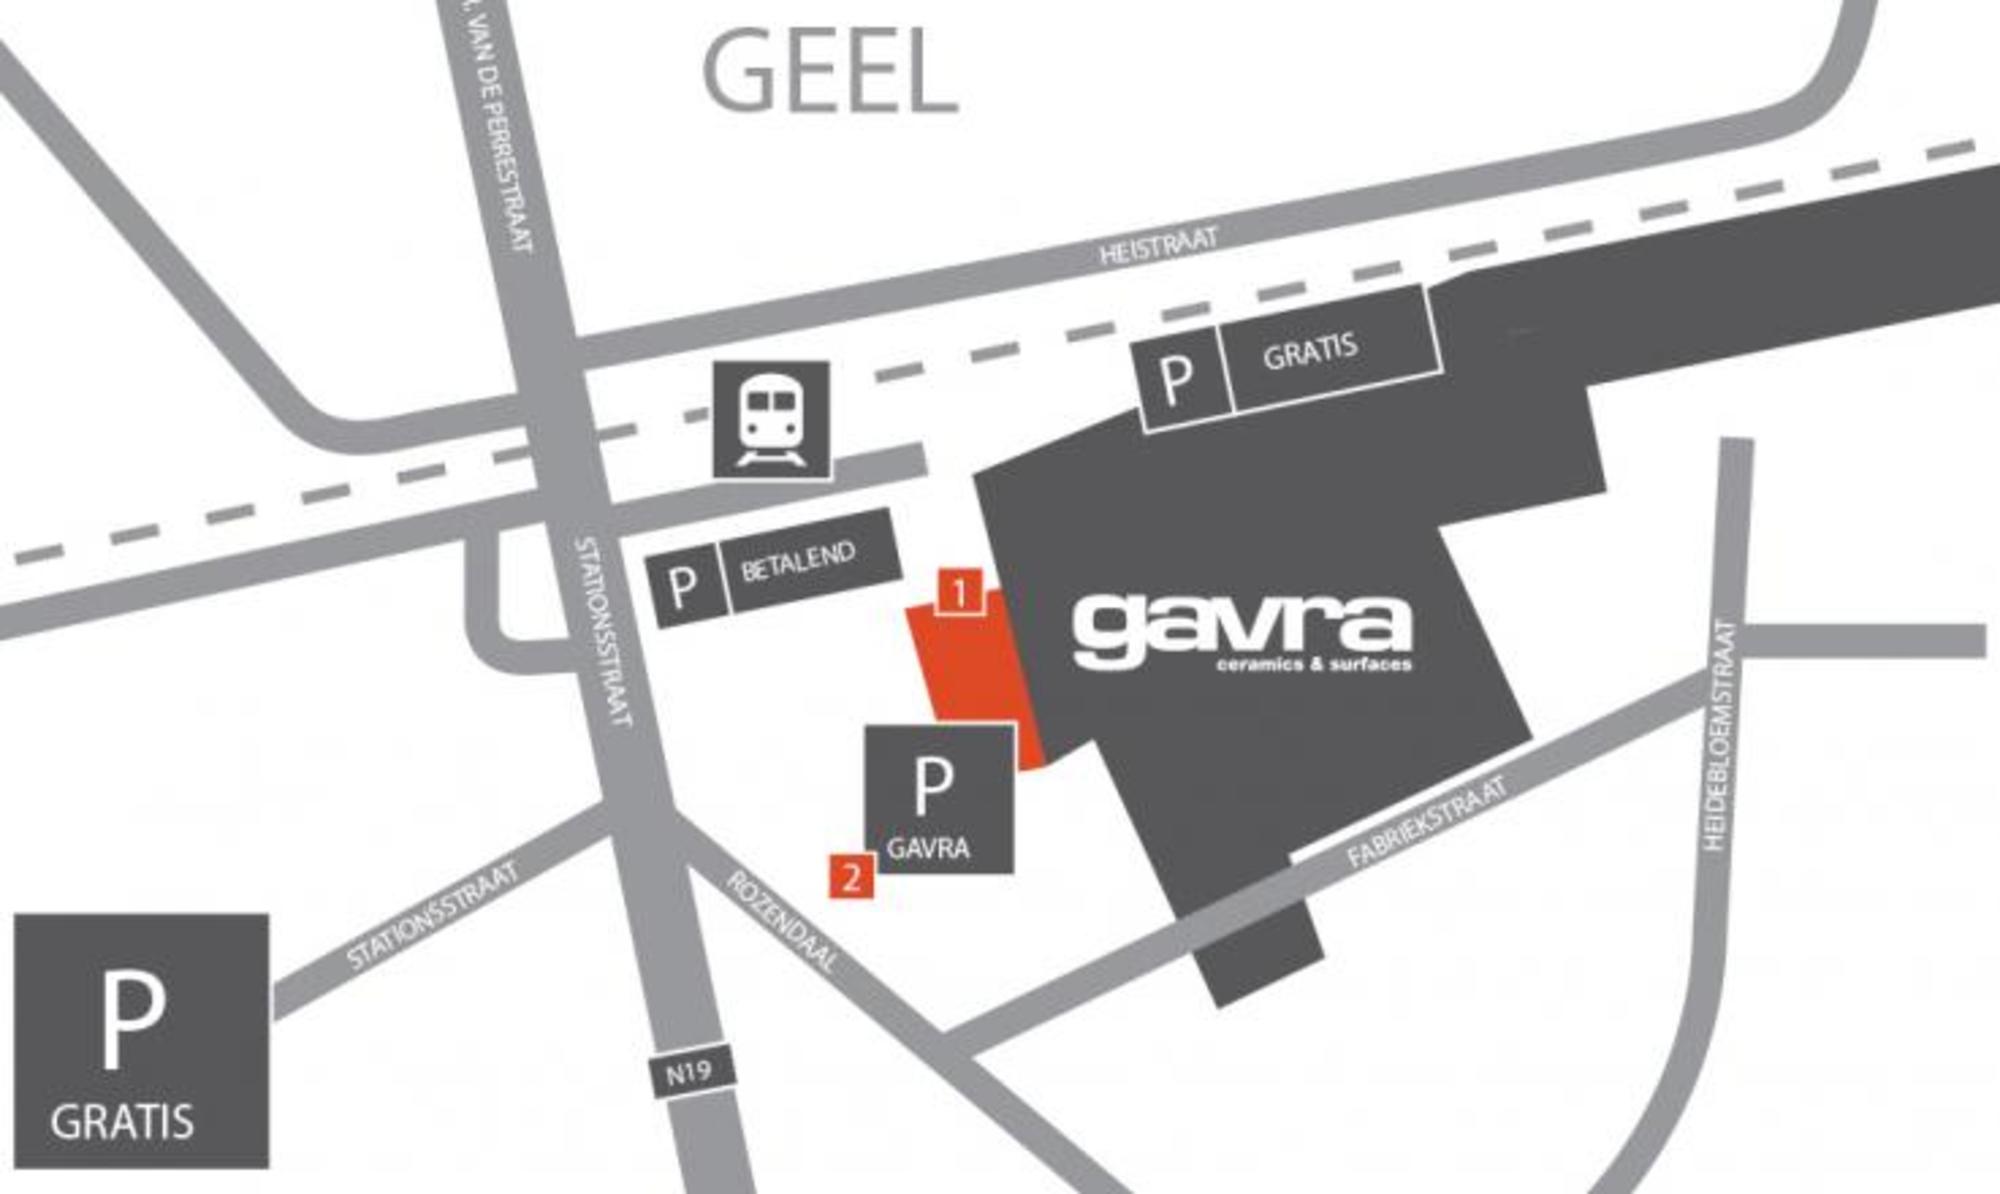 Gavra Salle d'exposition carrelage & surfaces d’Anvers Geel plan itinéraire